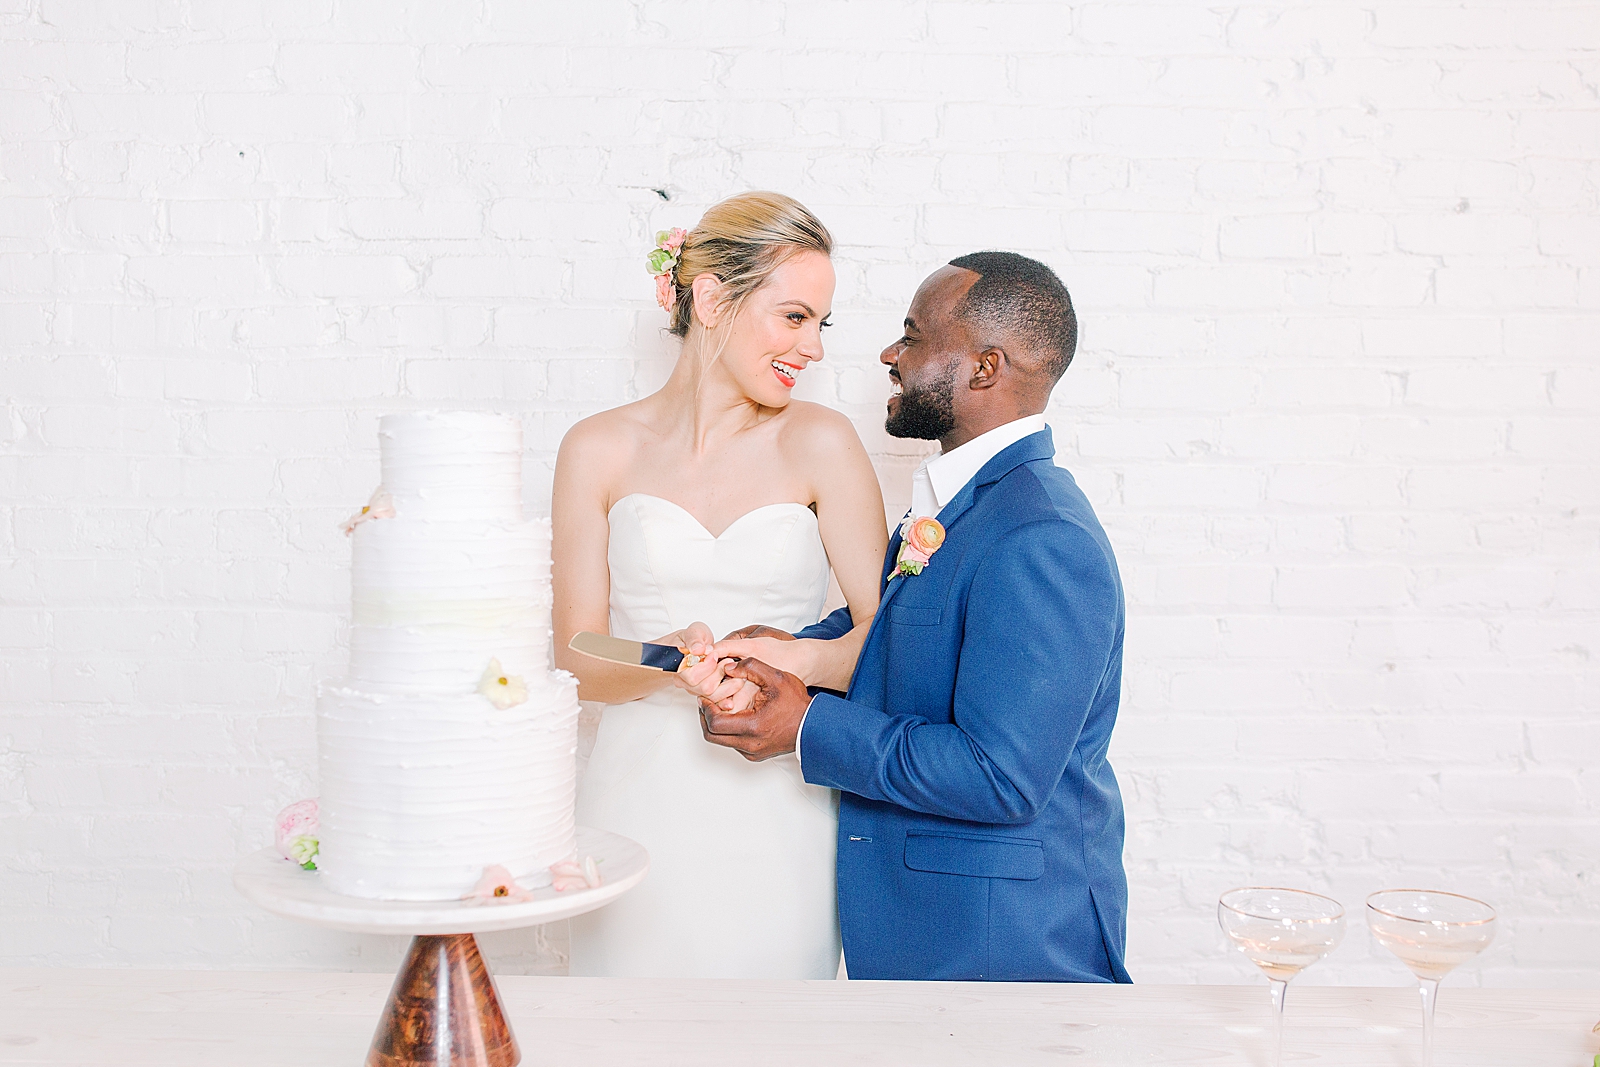 Spring Brickyard Wedding Reception Bride and Groom Cutting Cake Photo